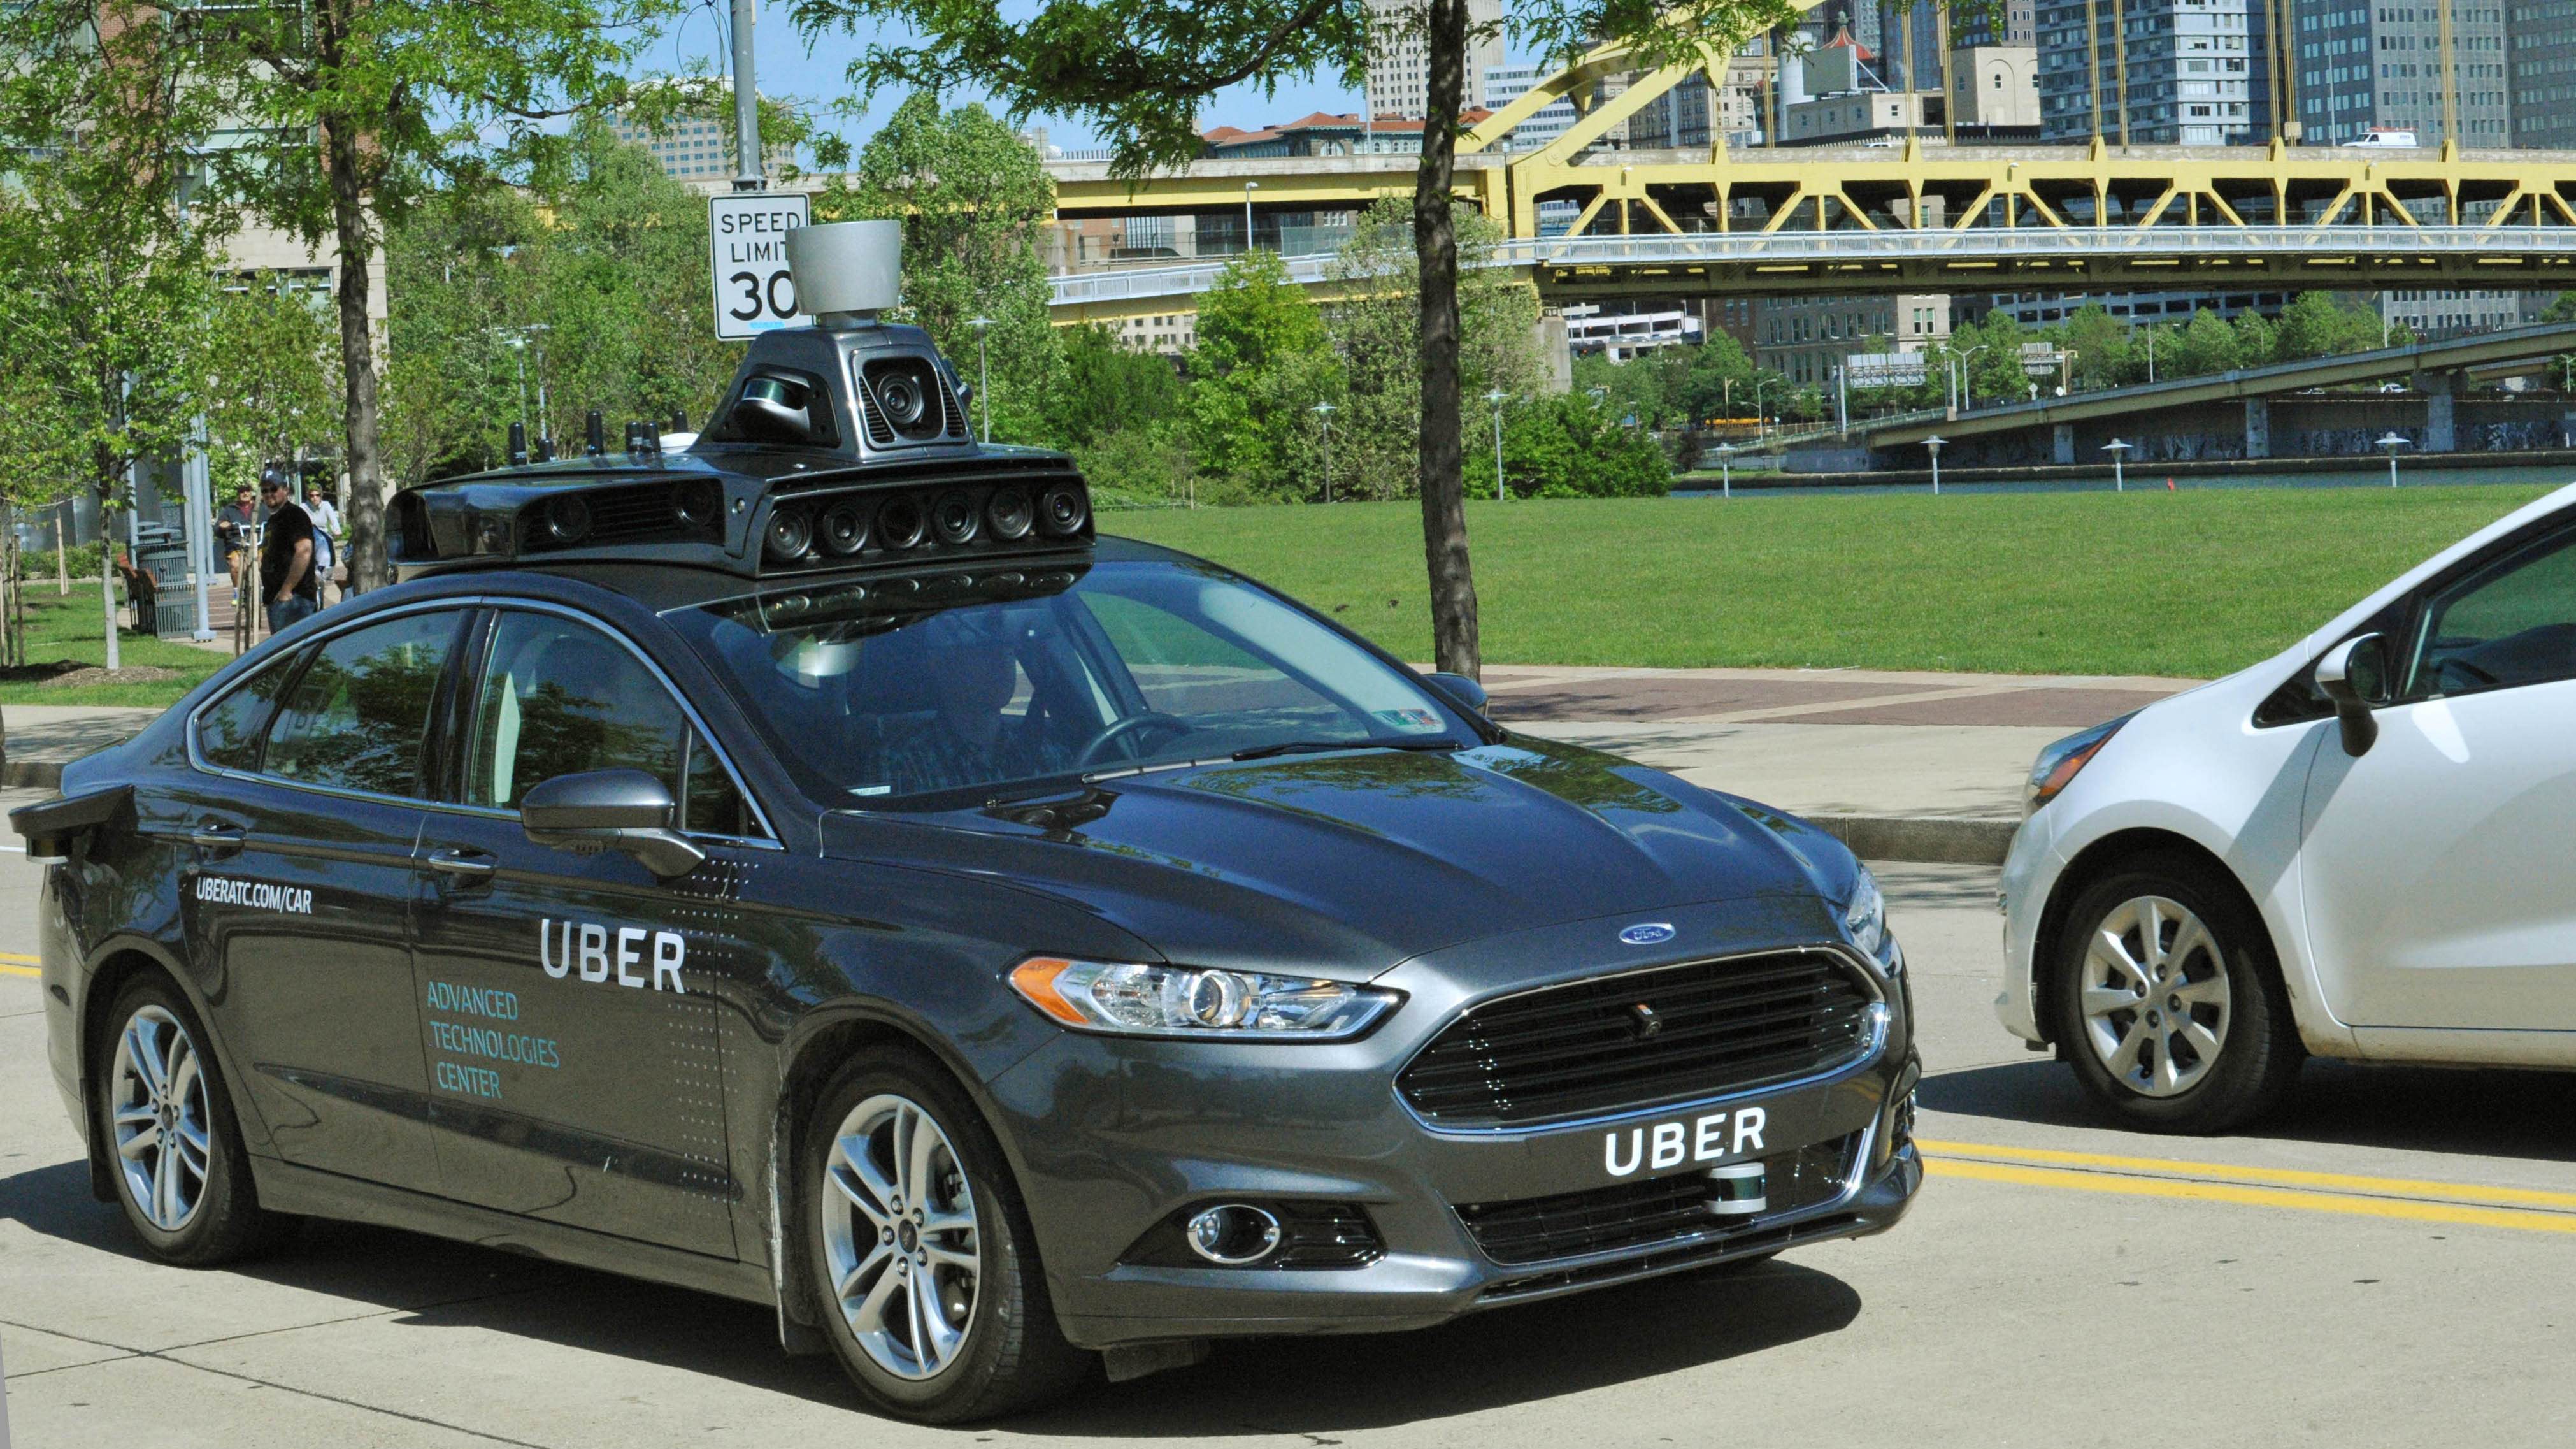 Uber self driving technology image 001